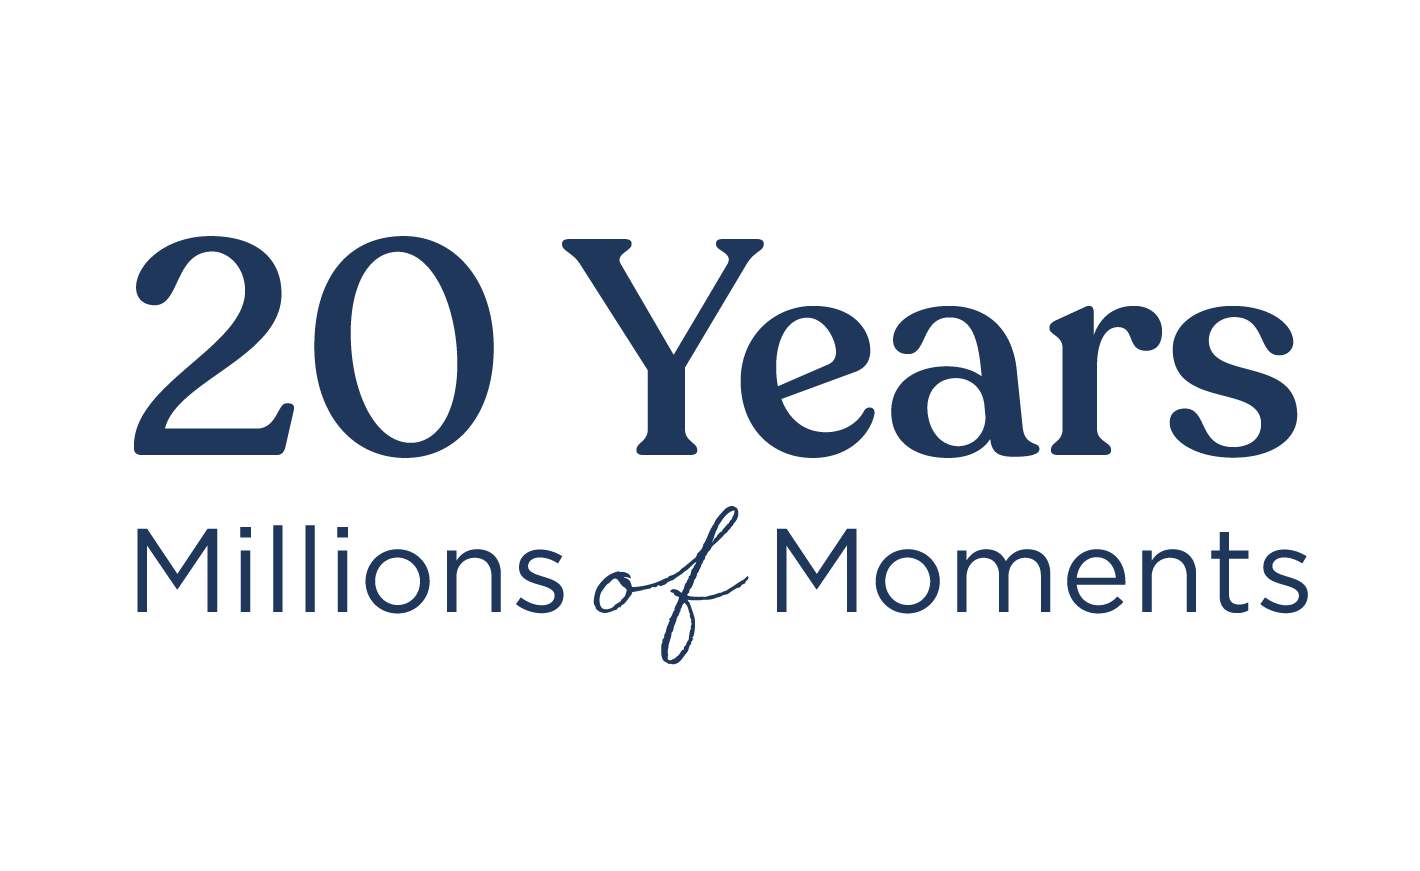 20th anniversary logo